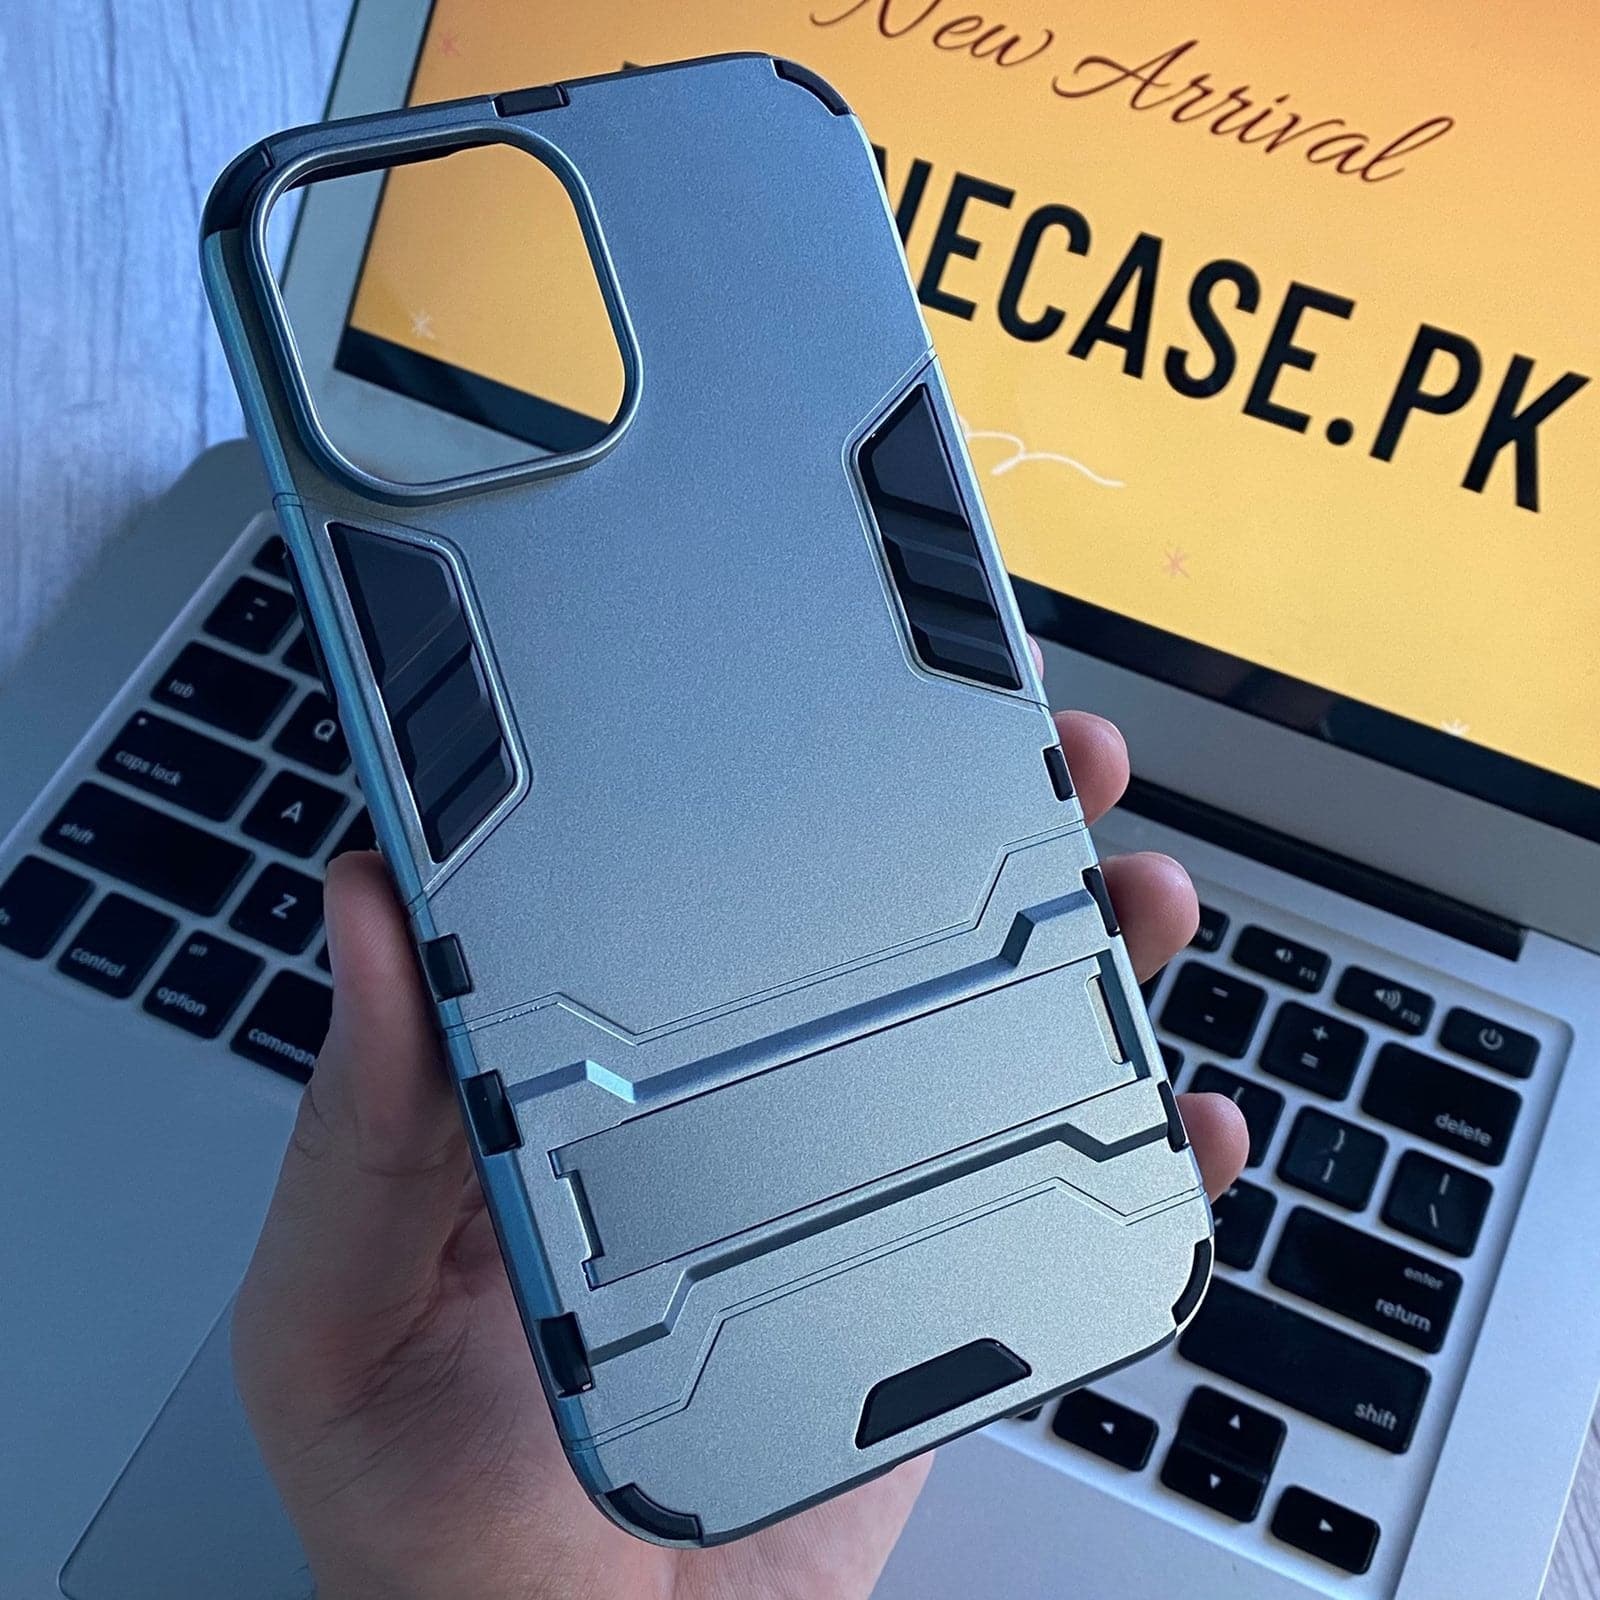 iPhone 13 Hybrid TPU+PC Iron Man Armor Shield Case